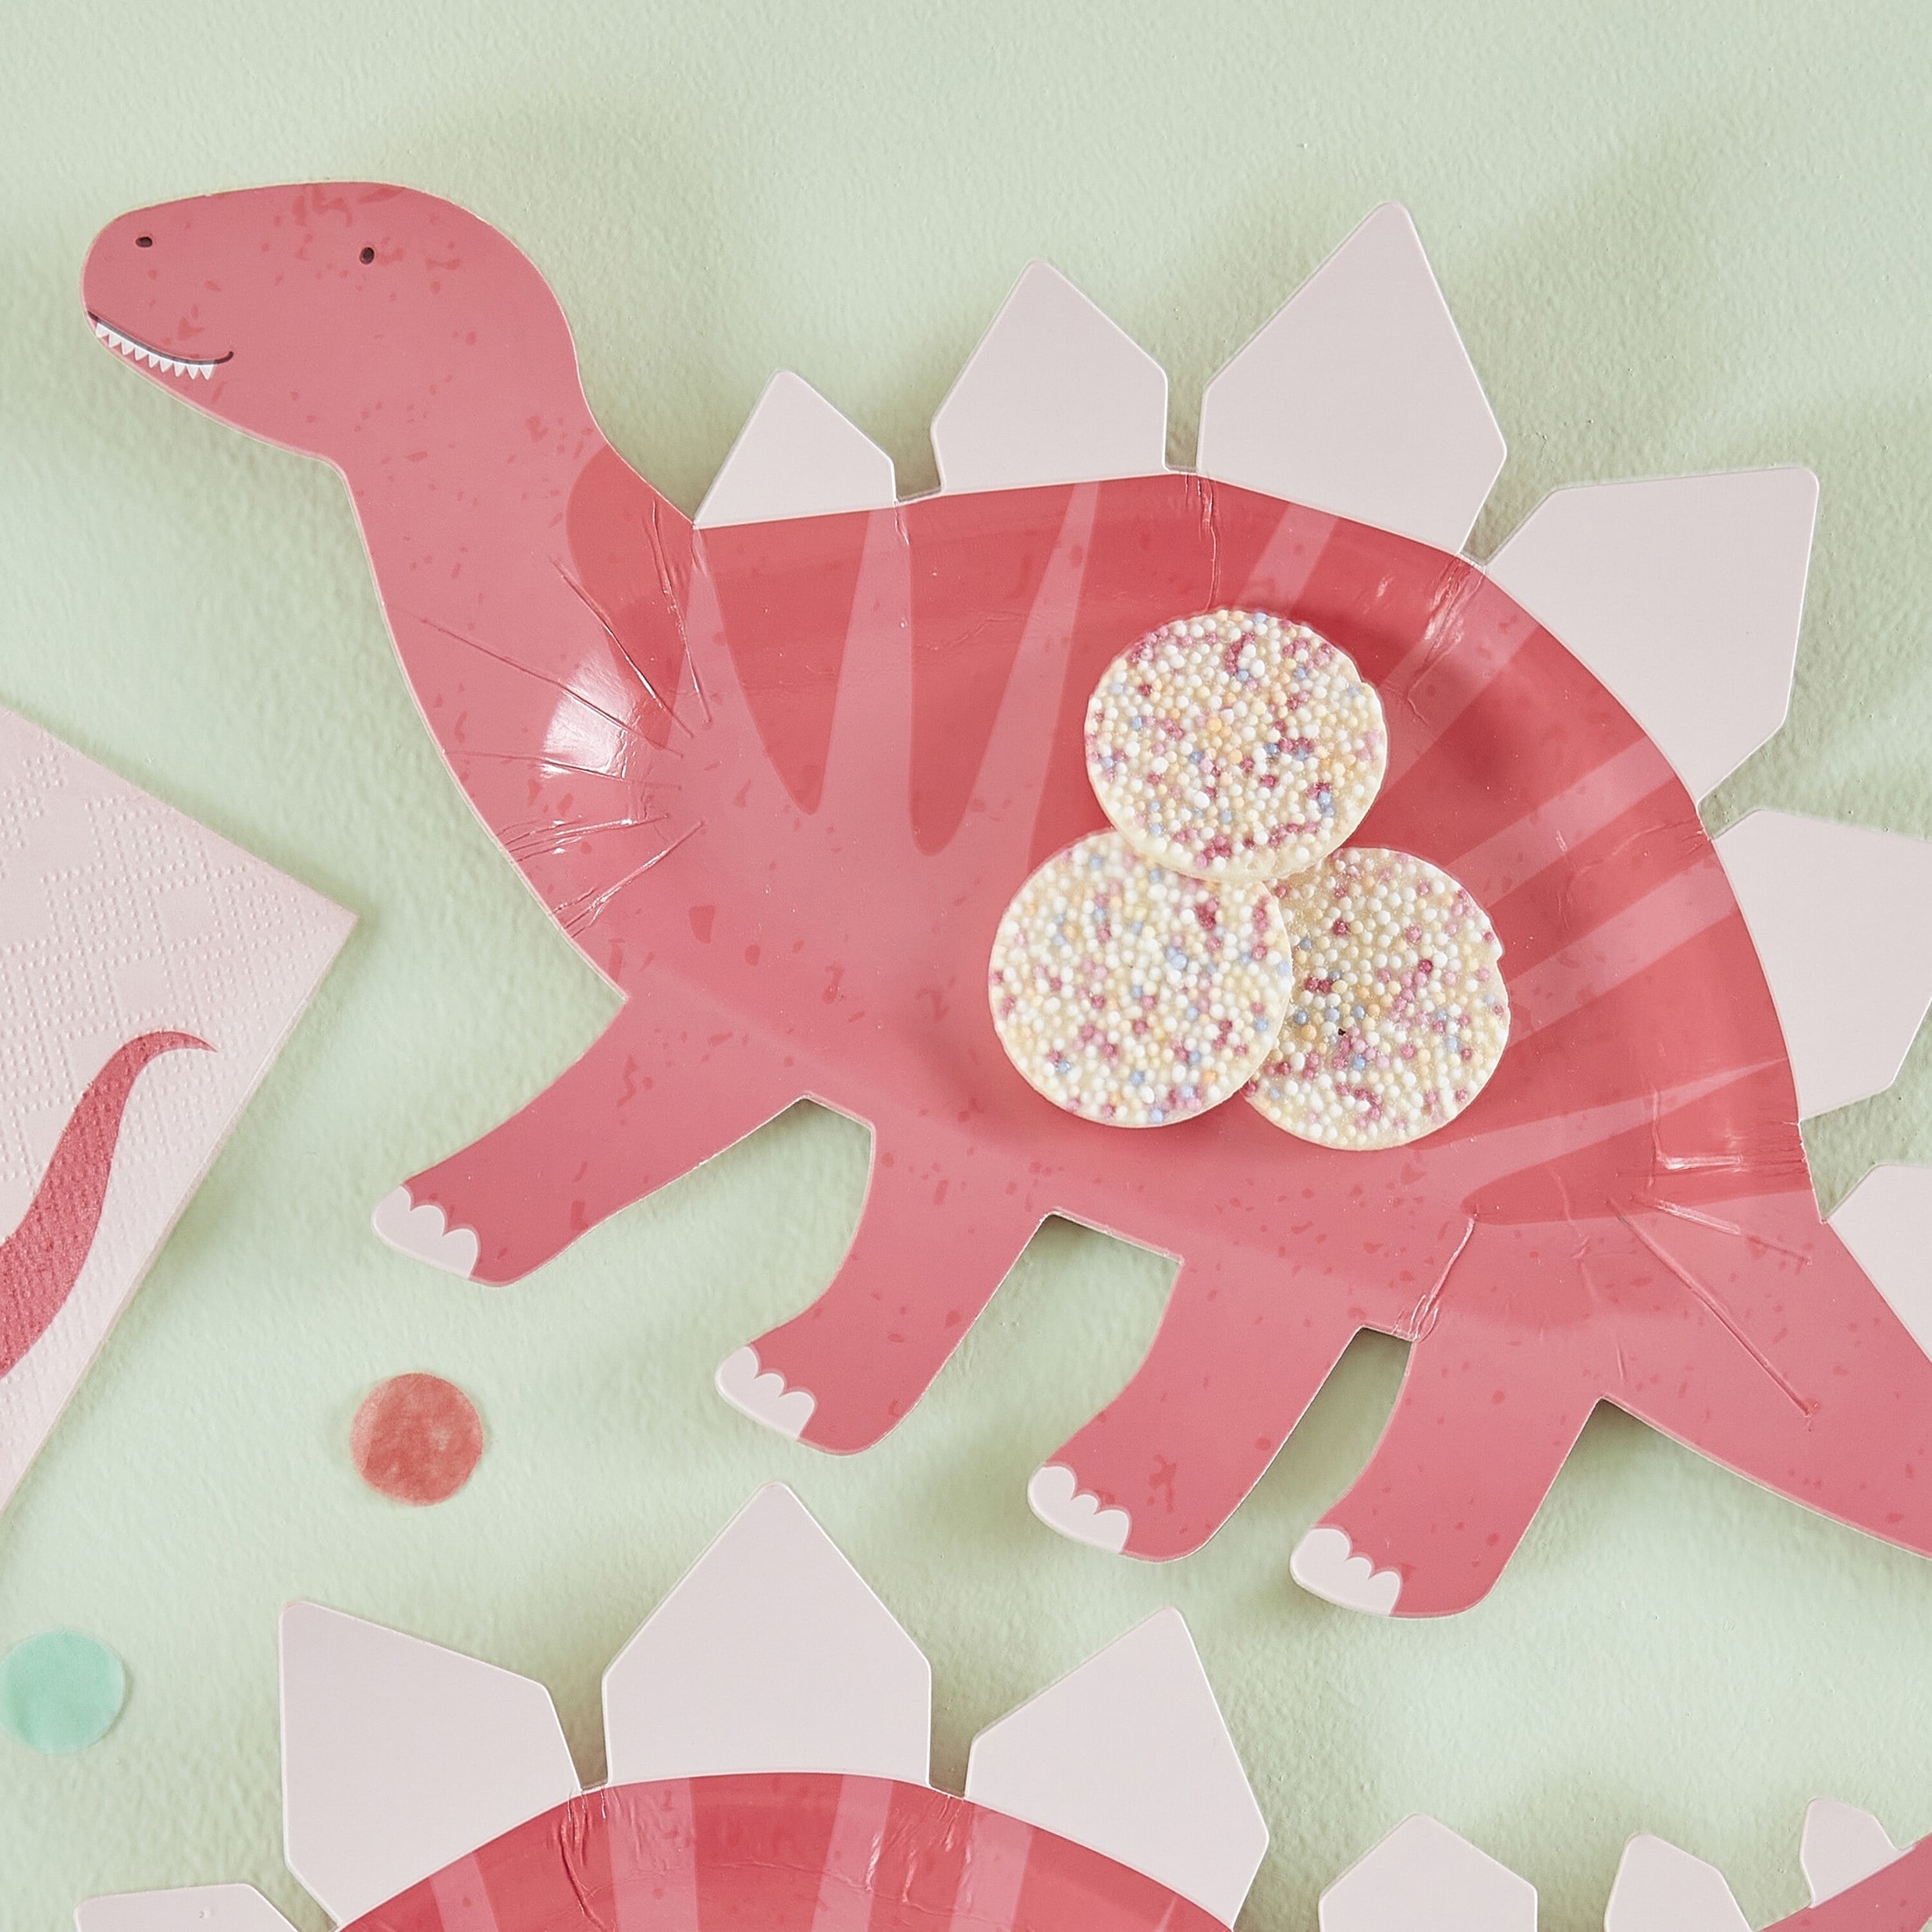 Dinosaur Roar Pink - Formede tallerkner 8 stk